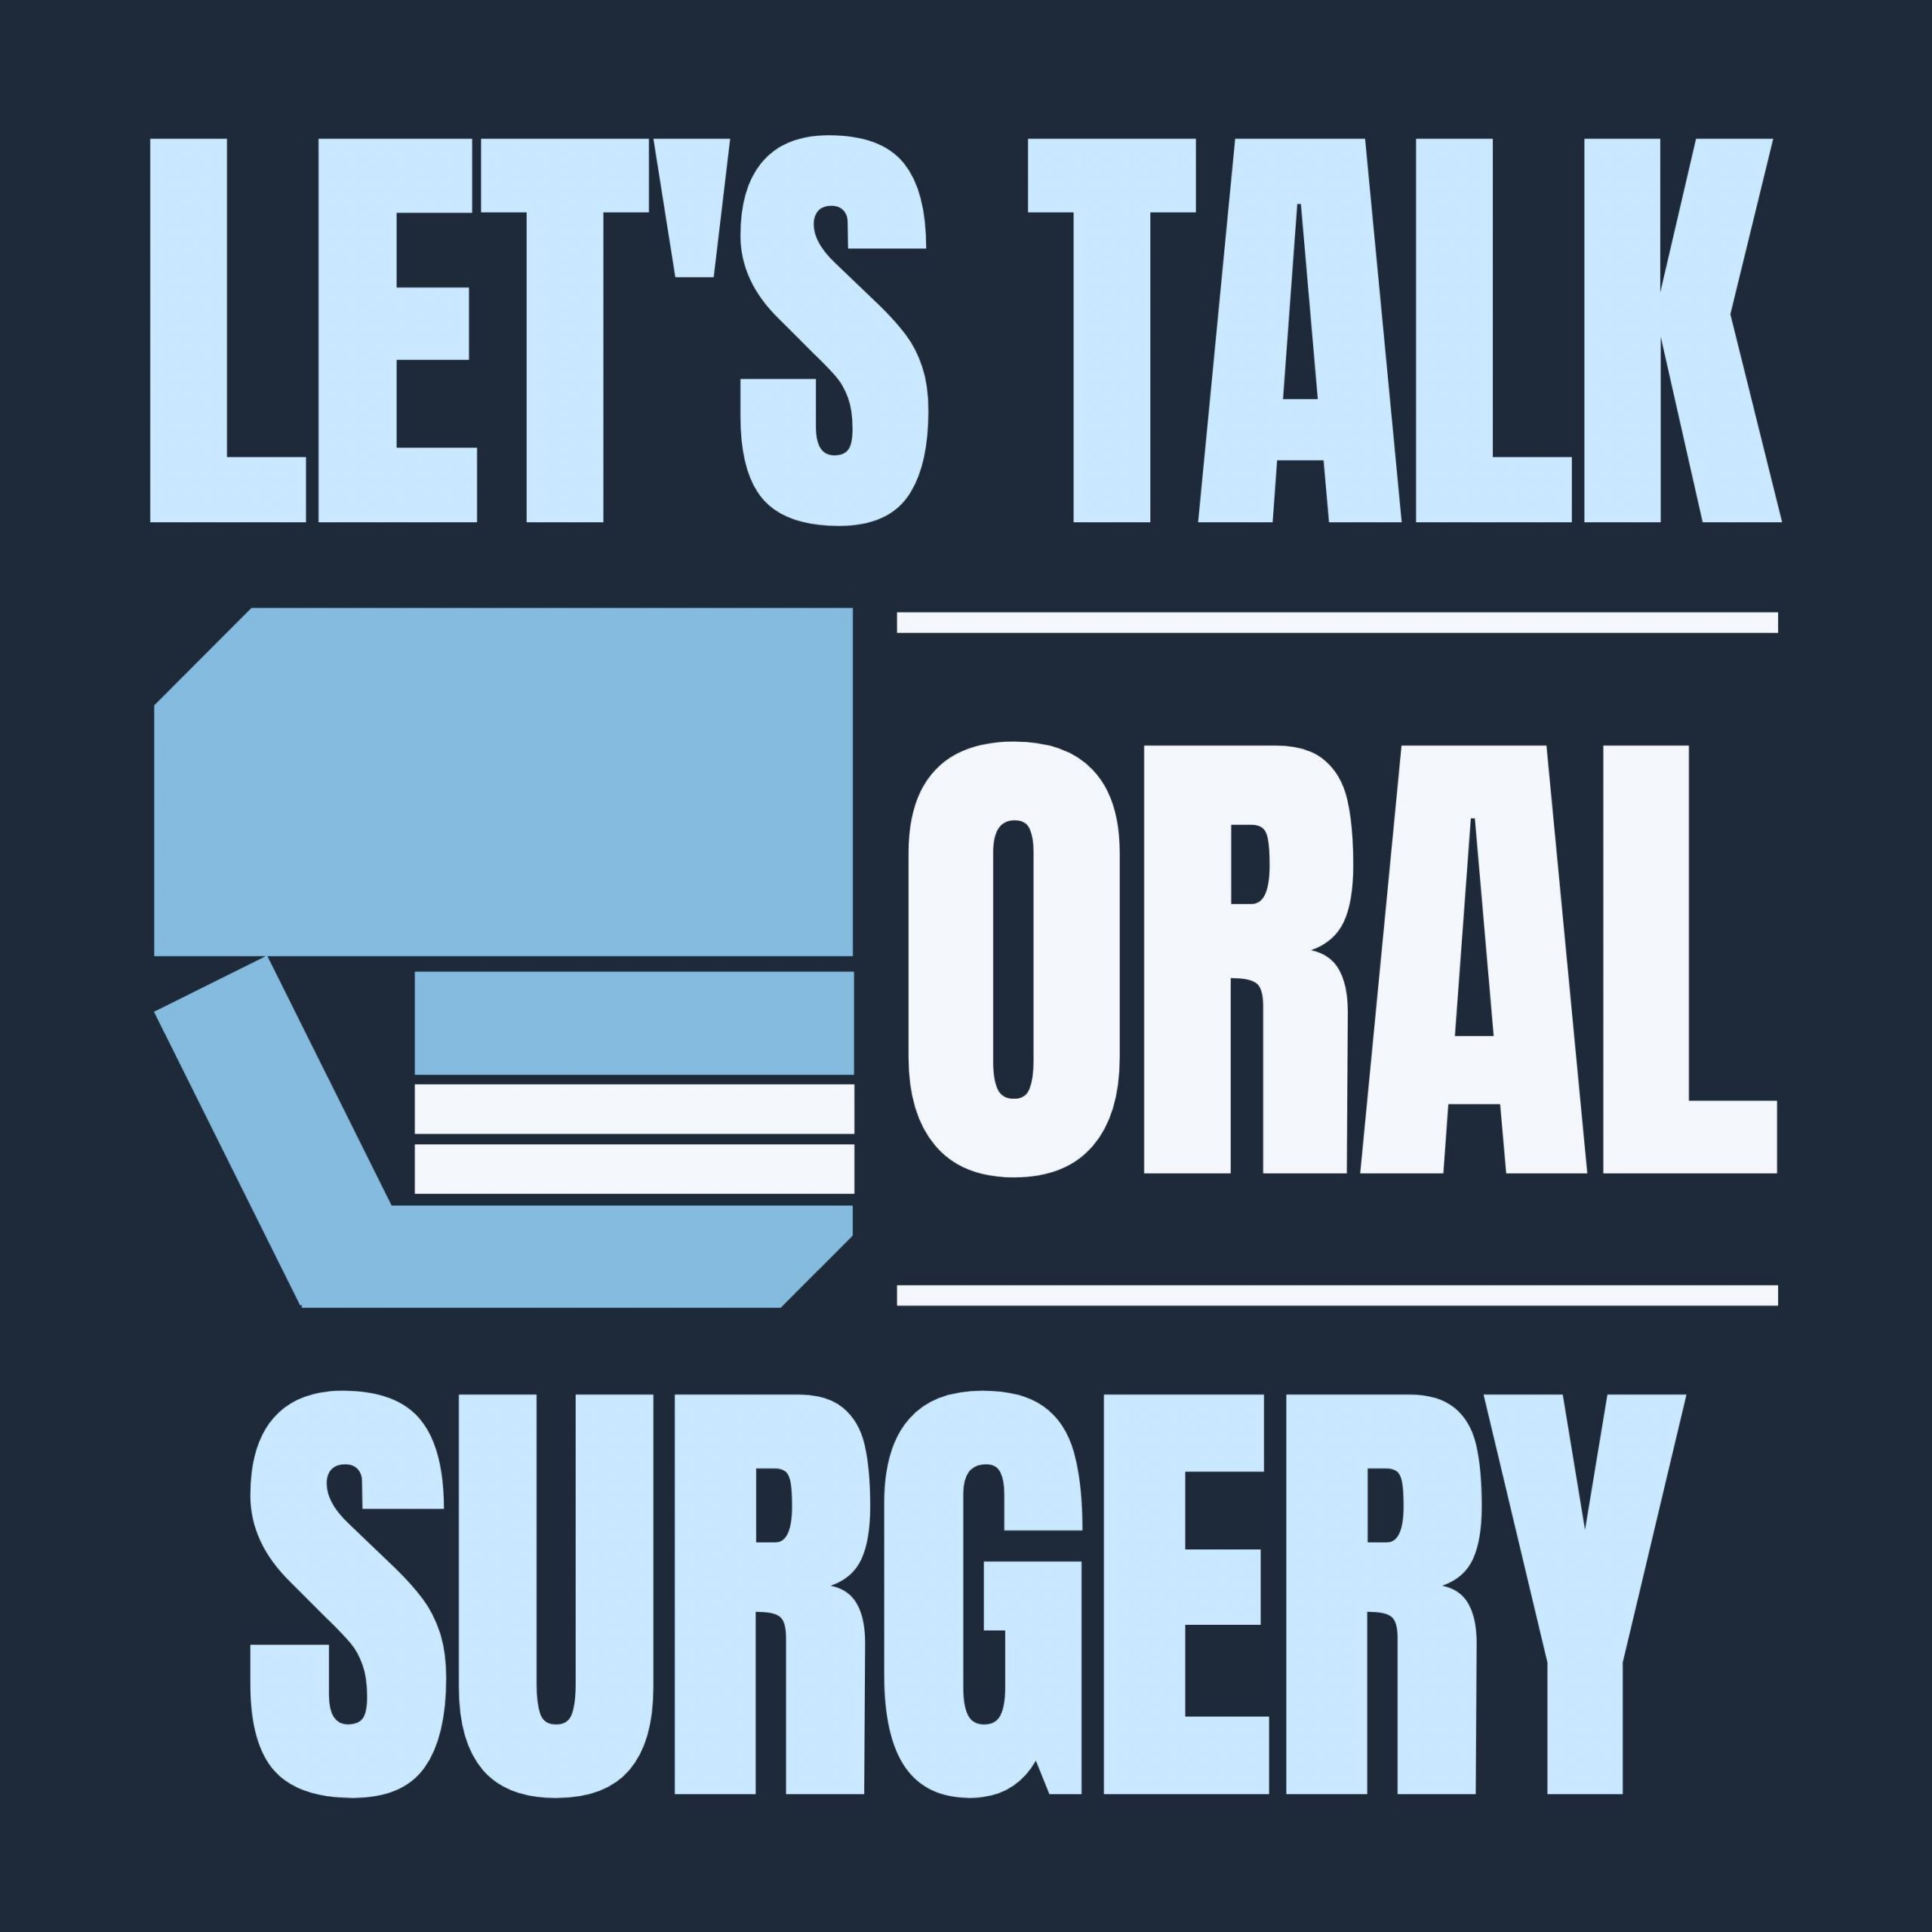 Let's Talk Oral Surgery